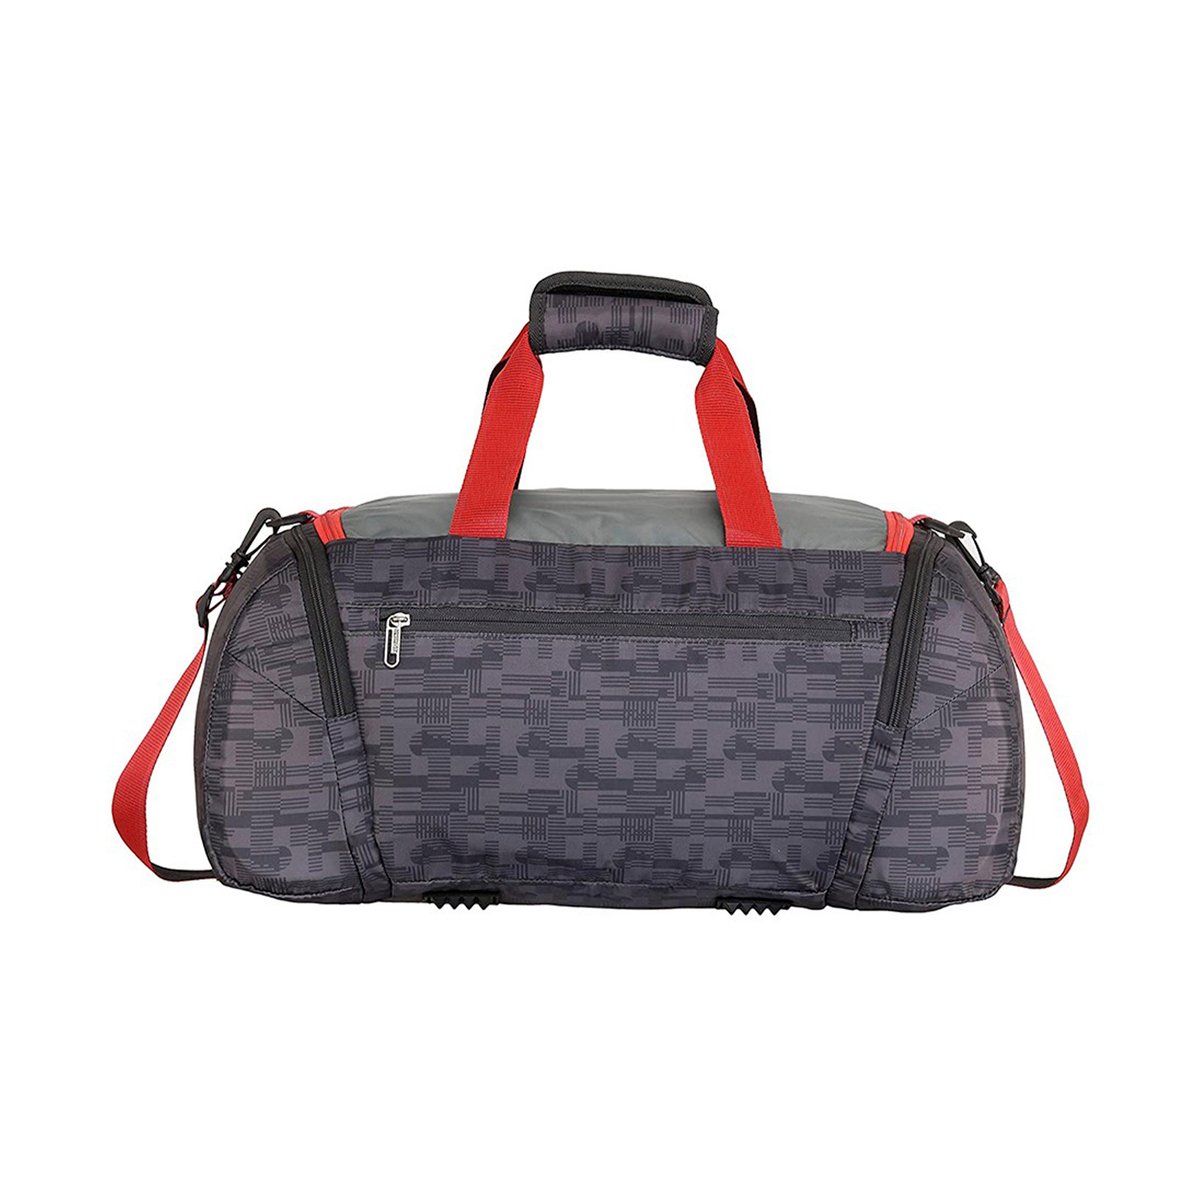 American Tourister Grid Duffle Bag, 65 cm, Grey